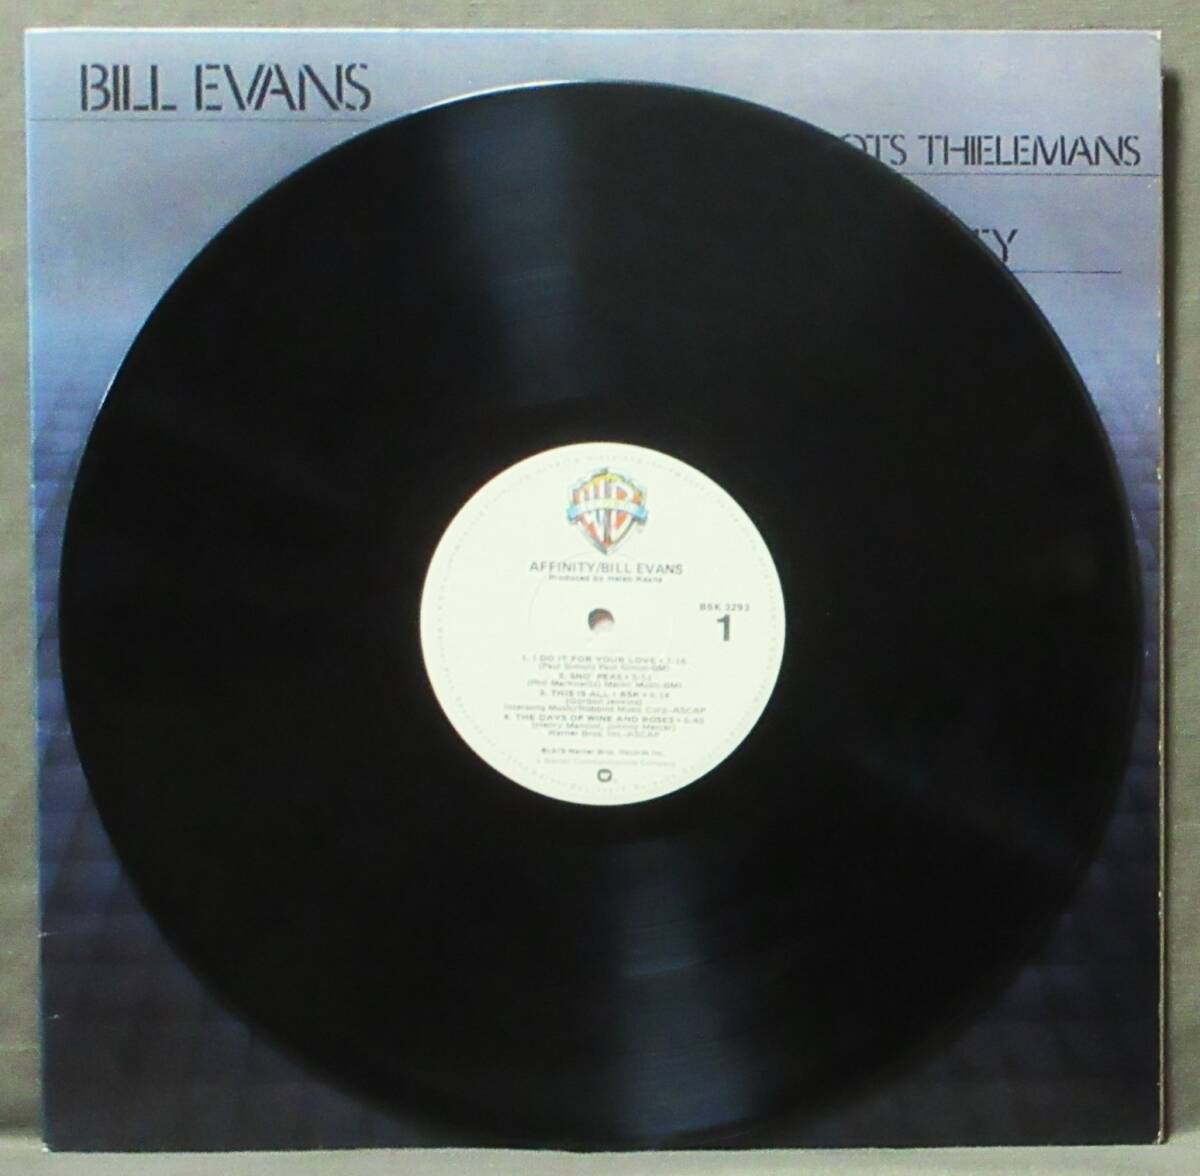 (LP) 美品! US/Orig BILL EVANS [AFFINITY] TOOTS THIELEMANS/オリジナル・インナー/ビル・エヴァンス/1979年/Warner Bros./BSK 3293_画像4